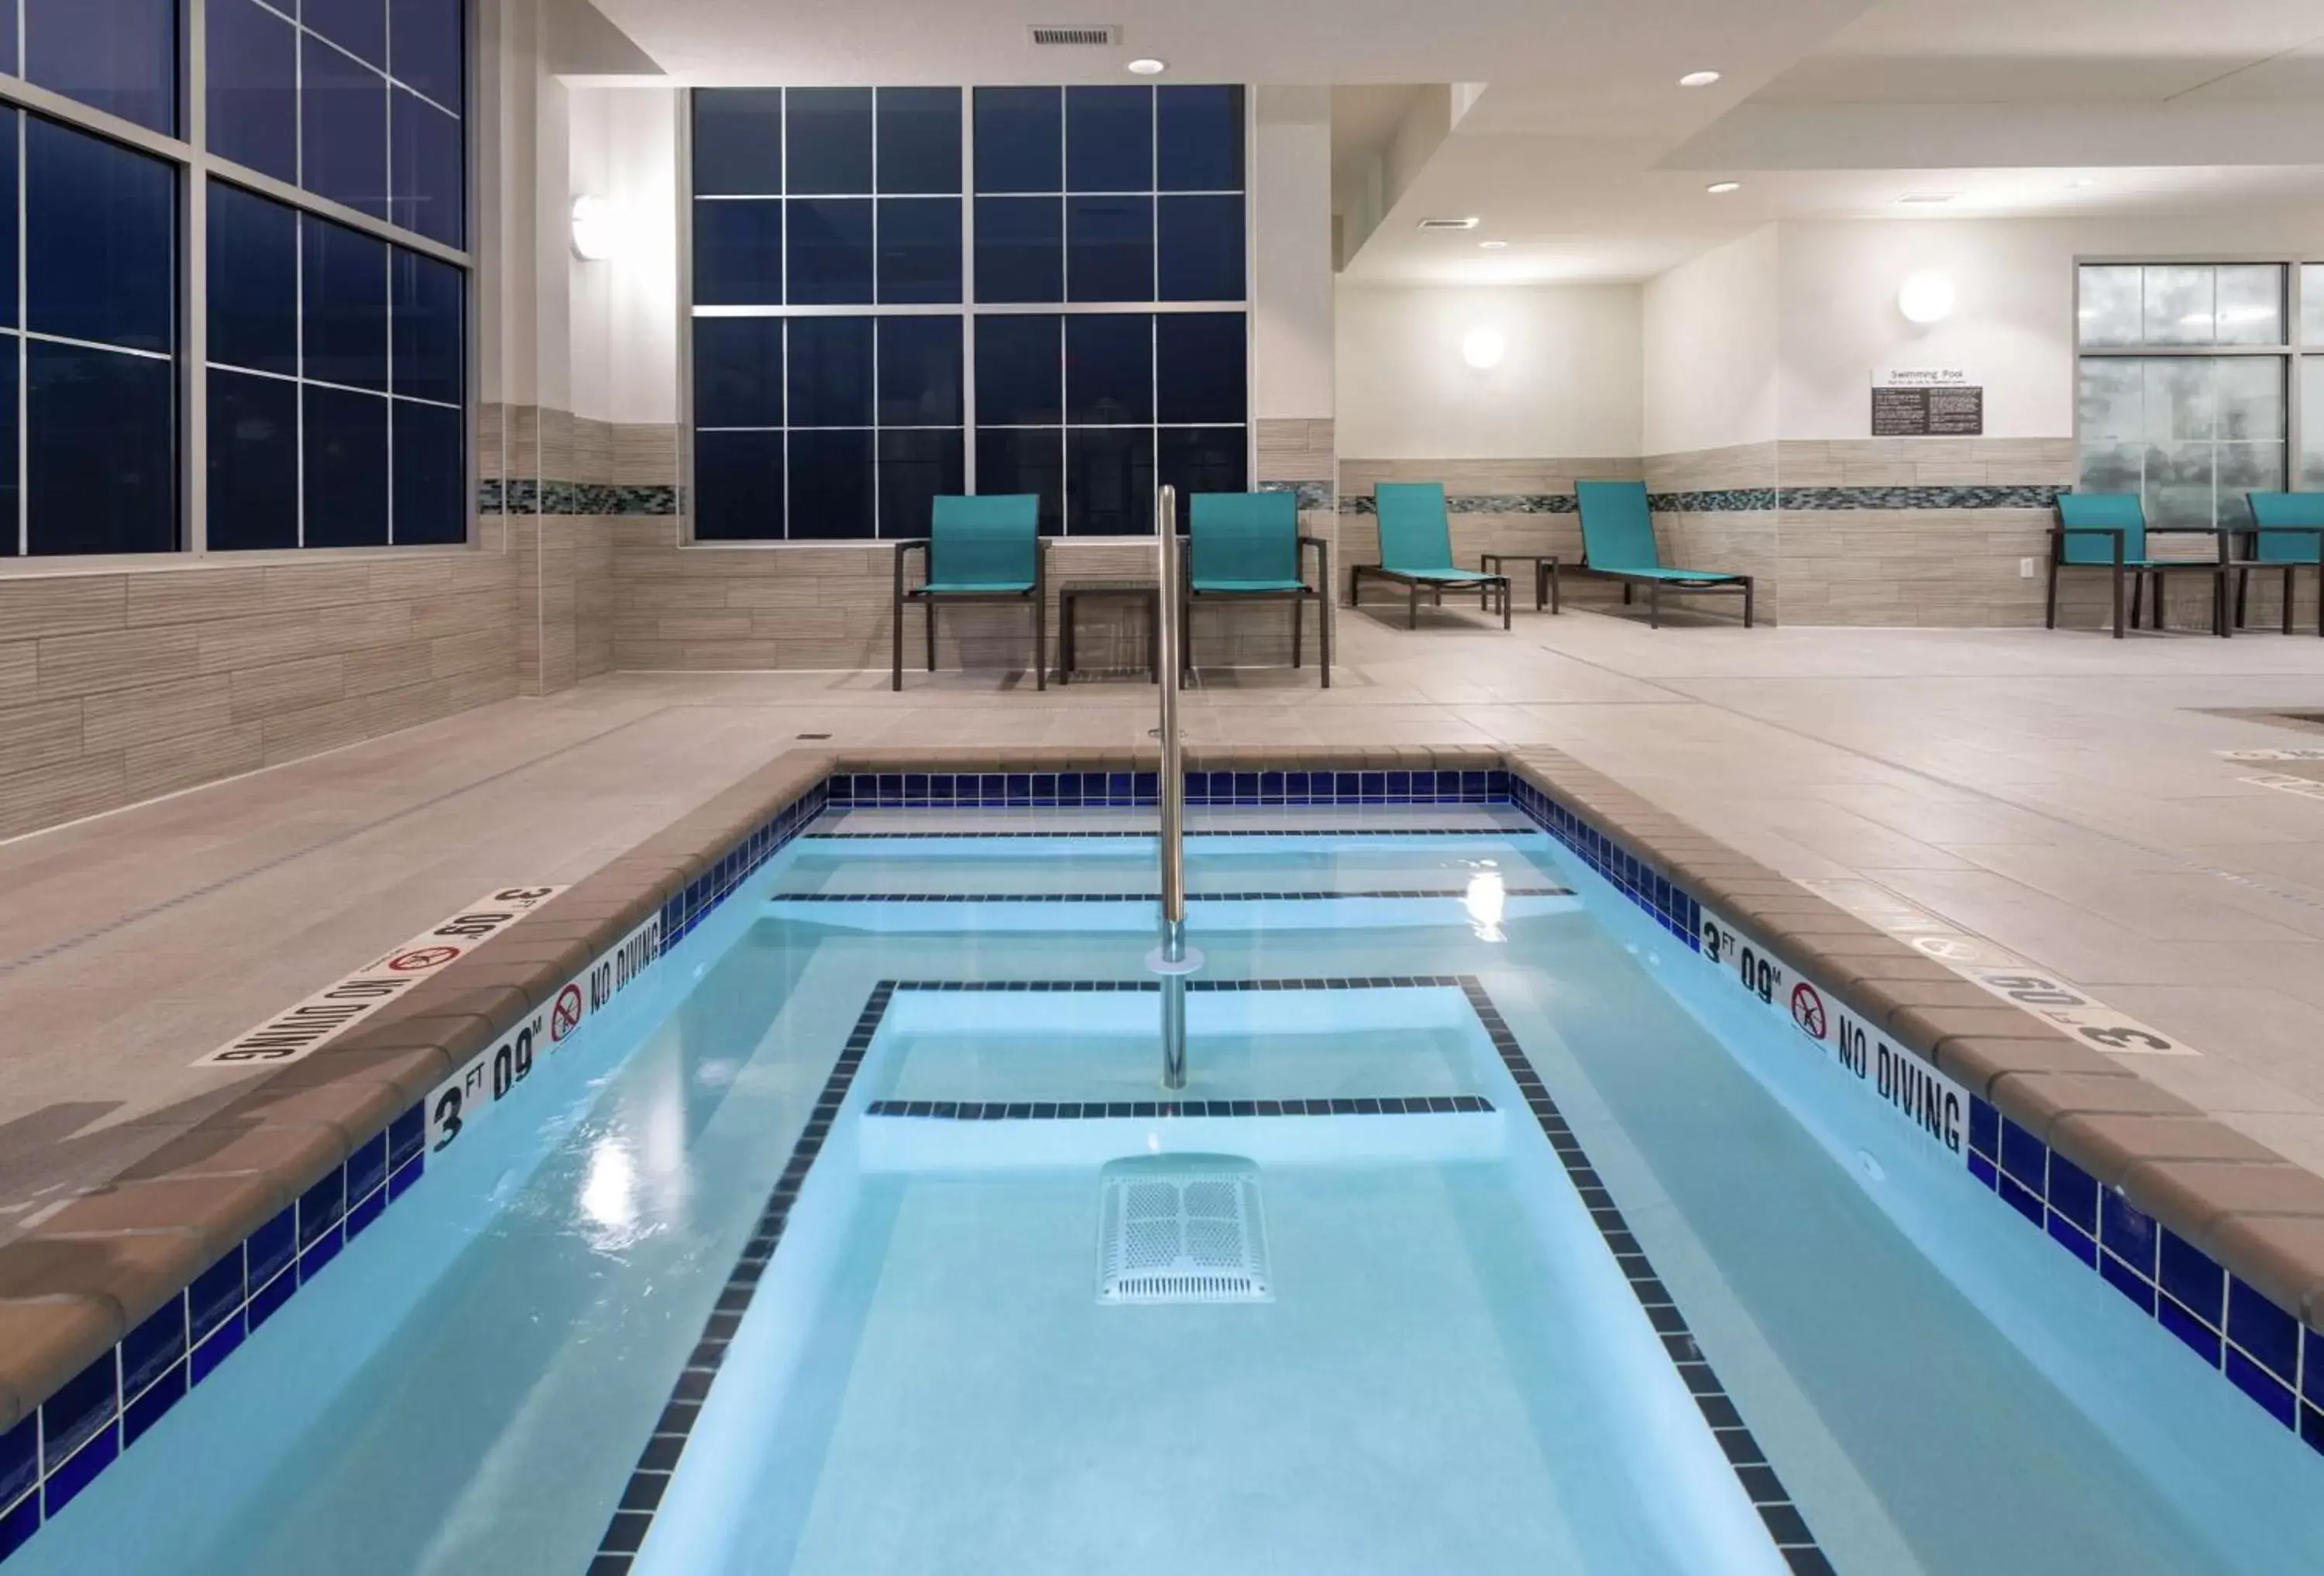 Sports, Swimming Pool in Hilton Garden Inn St. Cloud, Mn